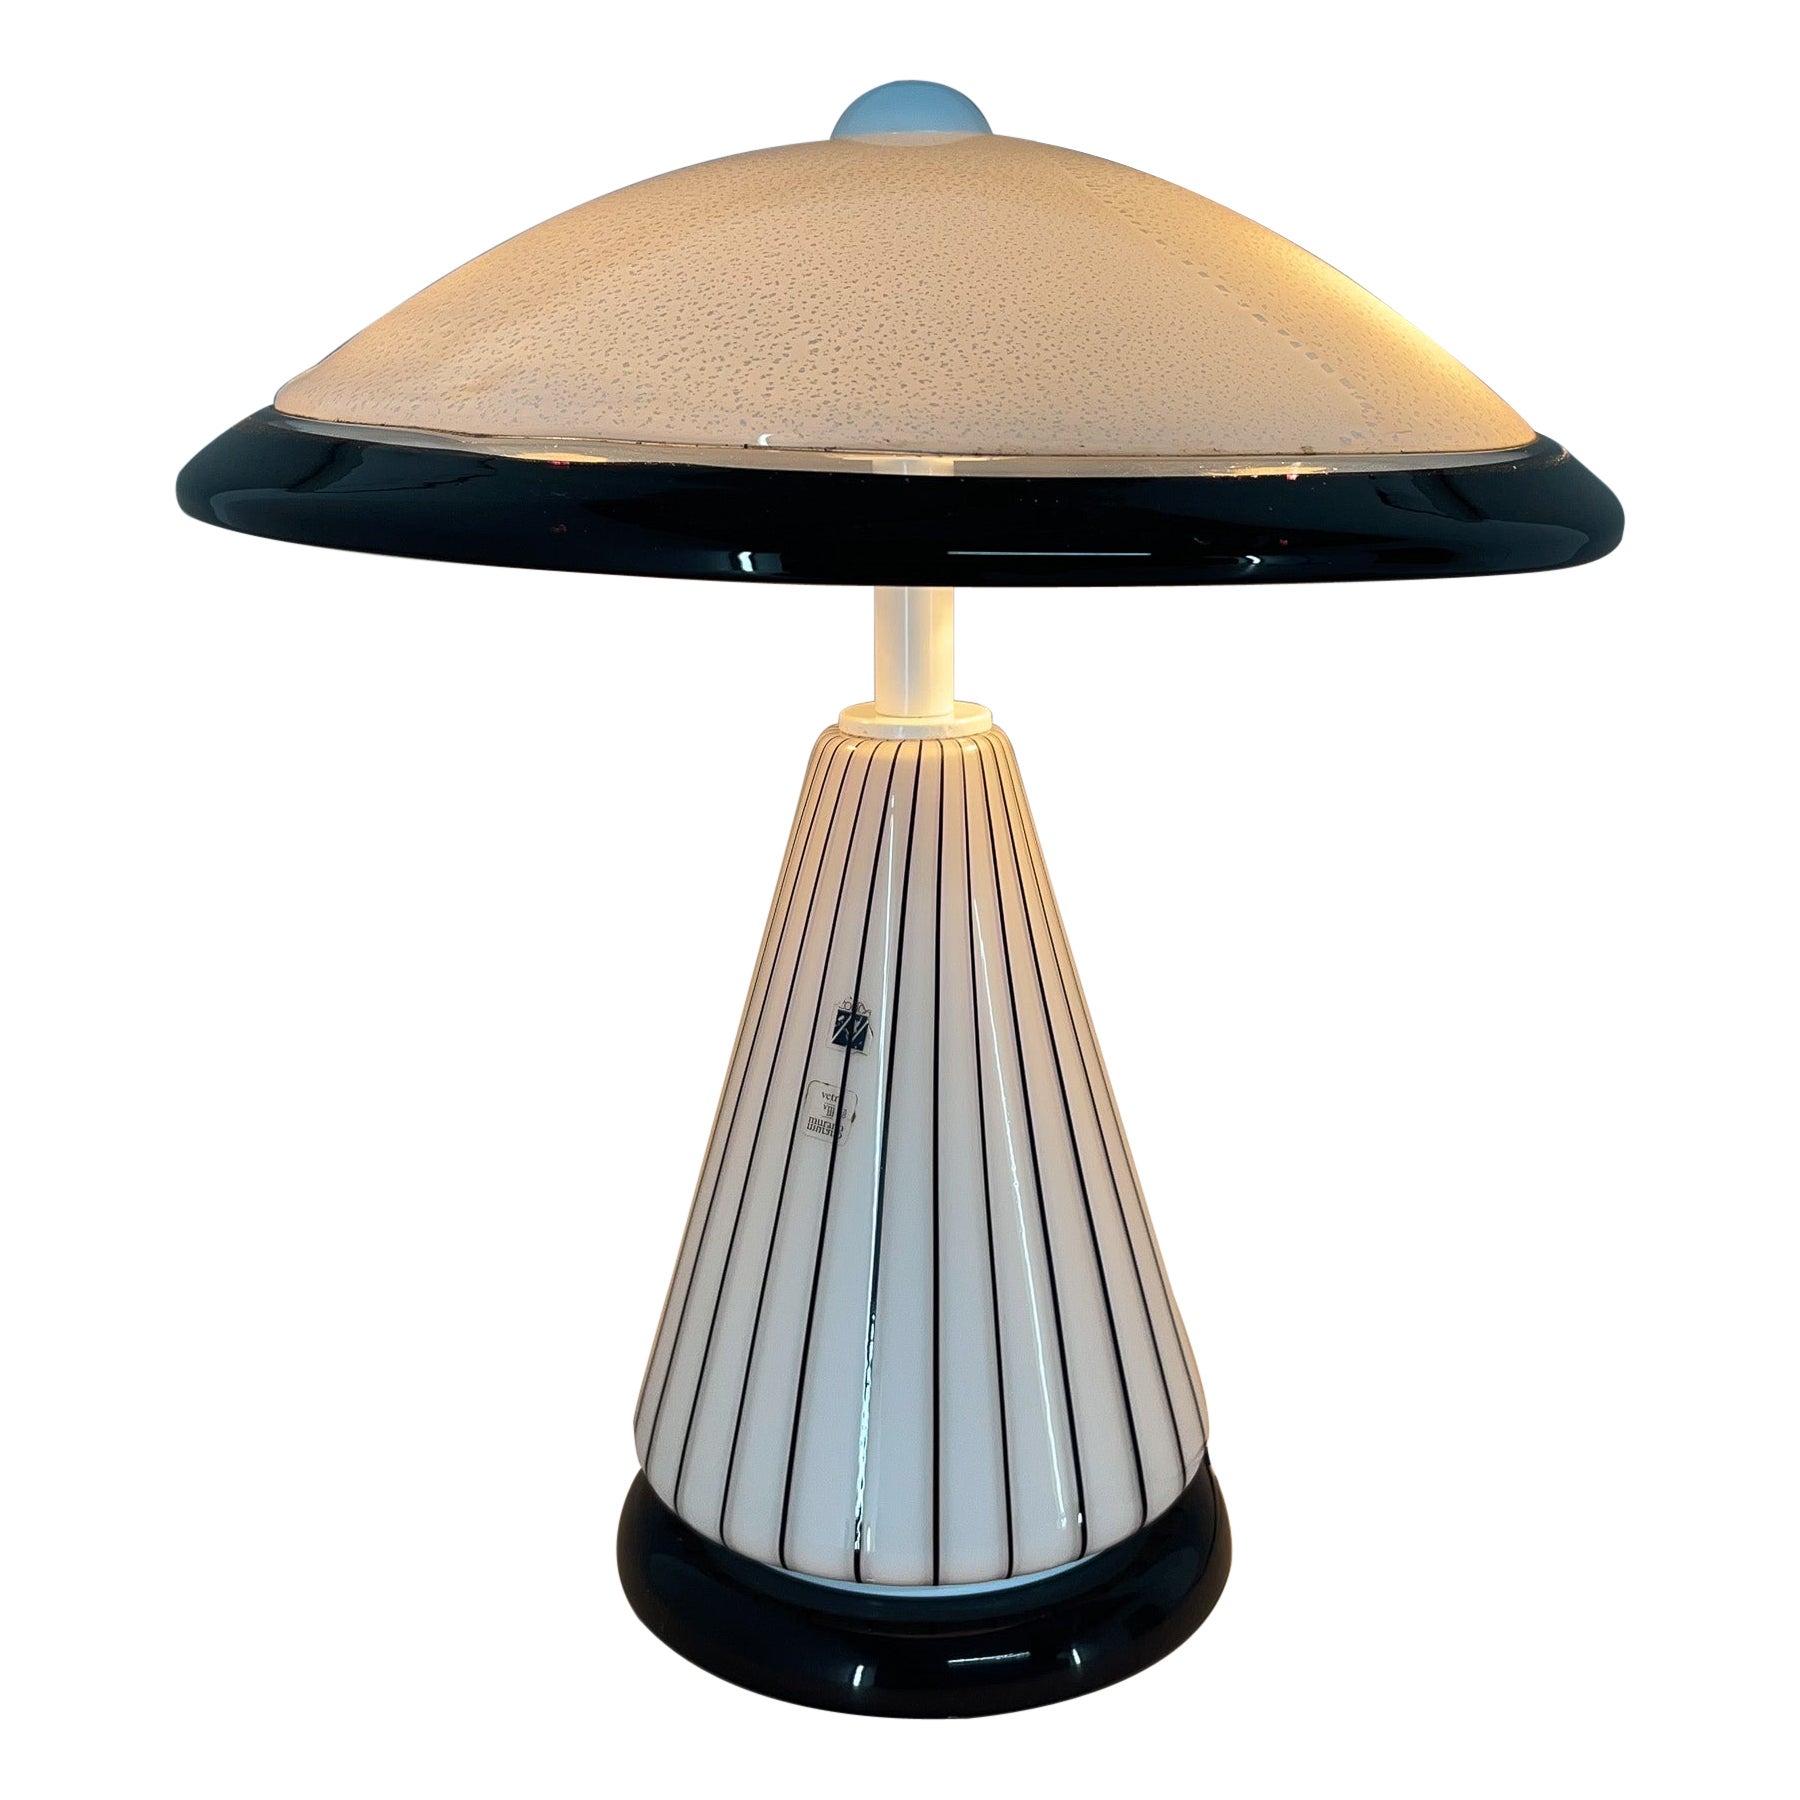 1980's Rare Italian Mushroom Vetri Murano Glass Table Lamp by ZONCA, Labeled